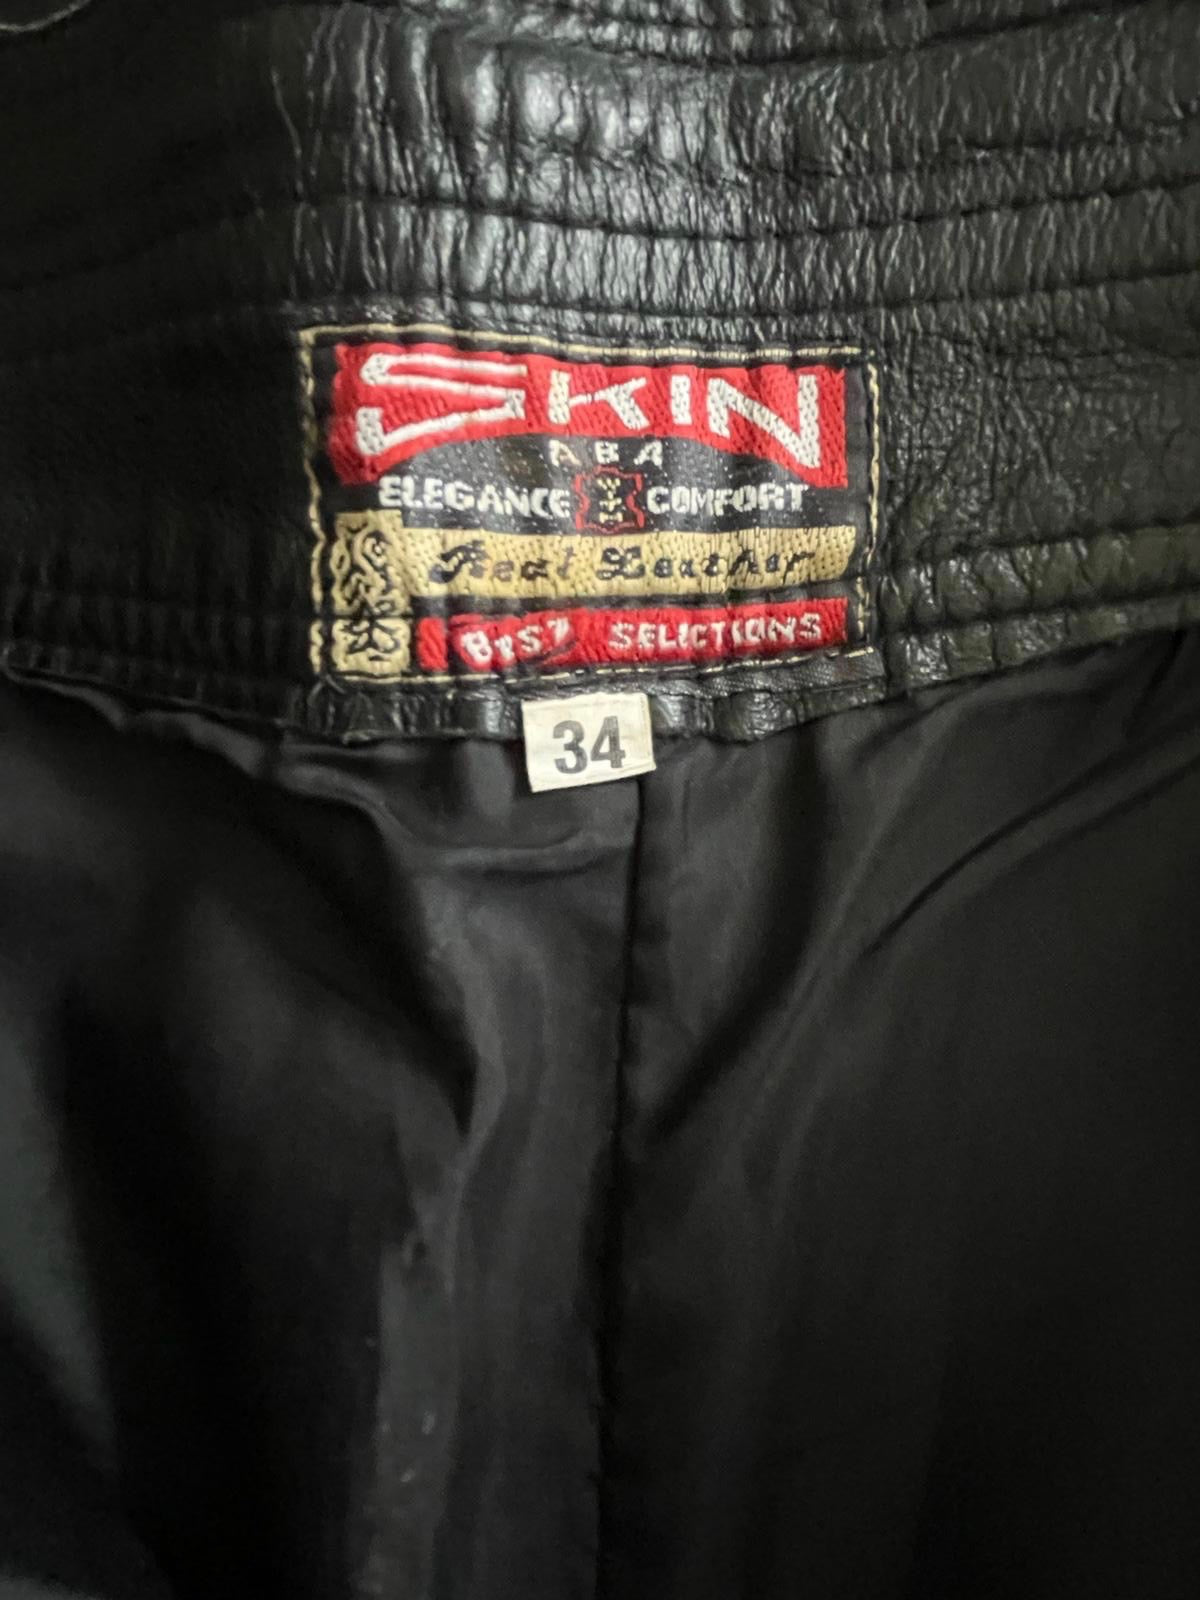 SKIN Leather Biker Trousers - size UK34 - Pre-loved